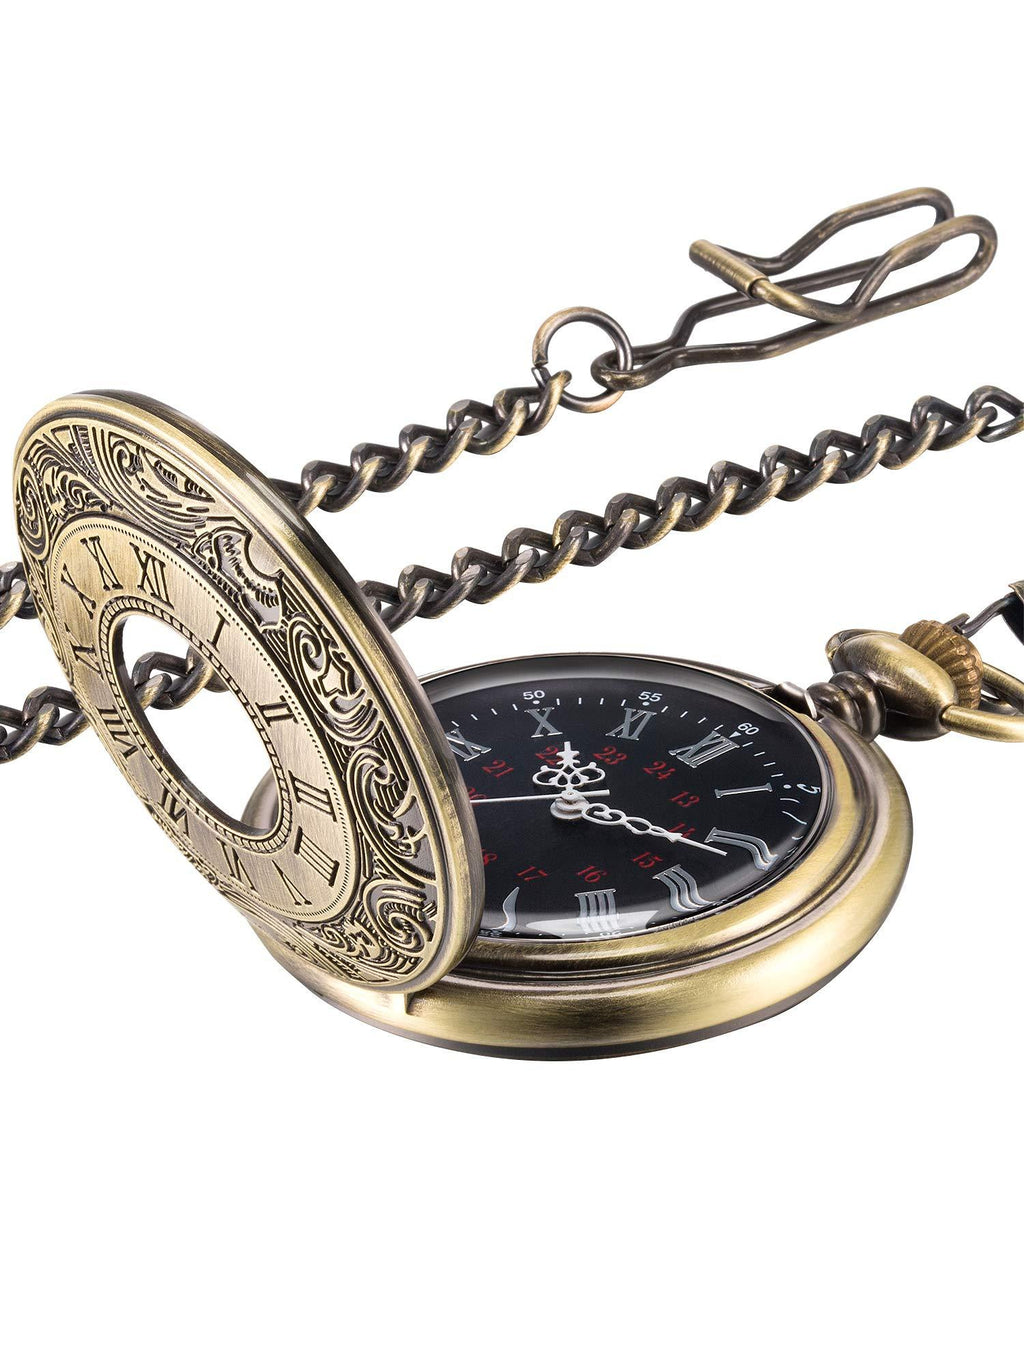 [Australia] - Hicarer Vintage Pocket Watch Steel Men Watch with Chain Bronze 